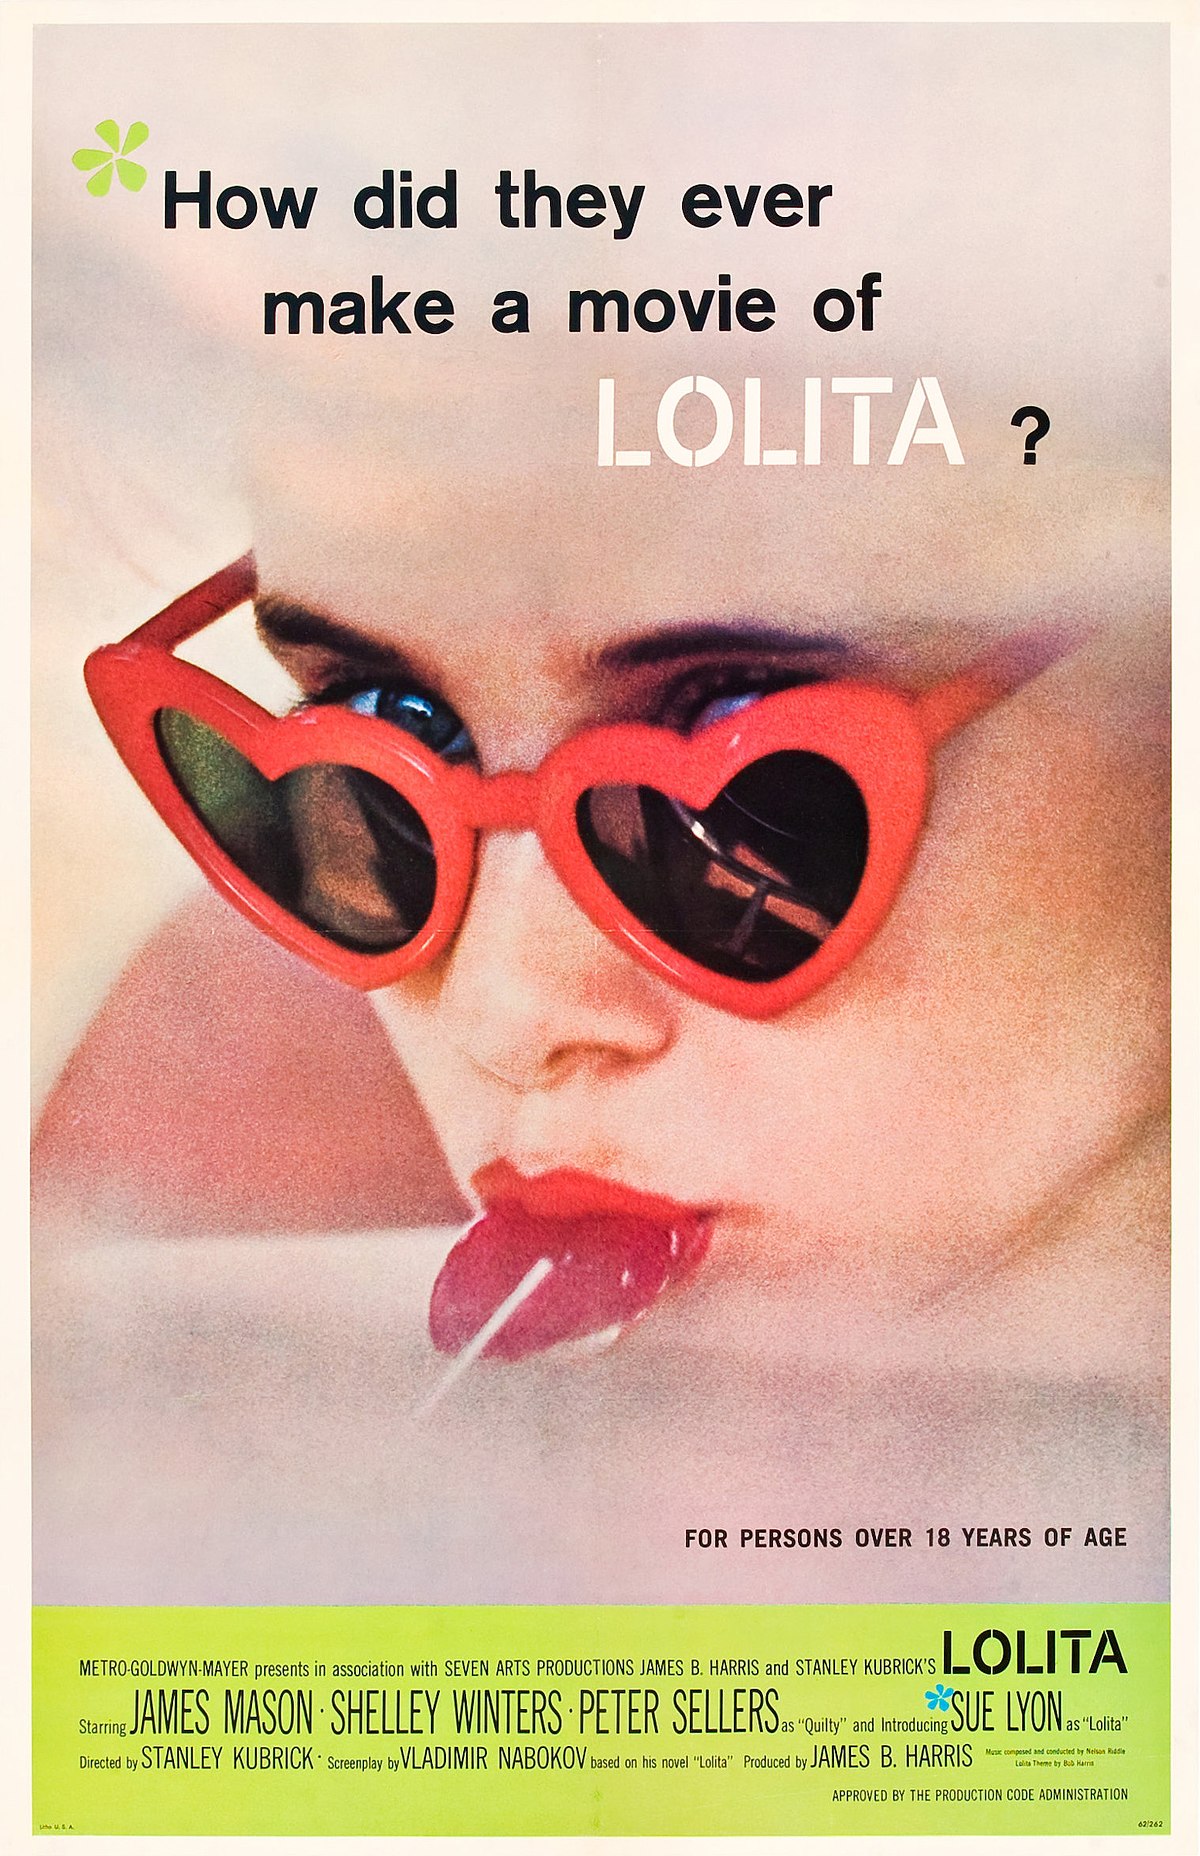 Lolita (1962 film)